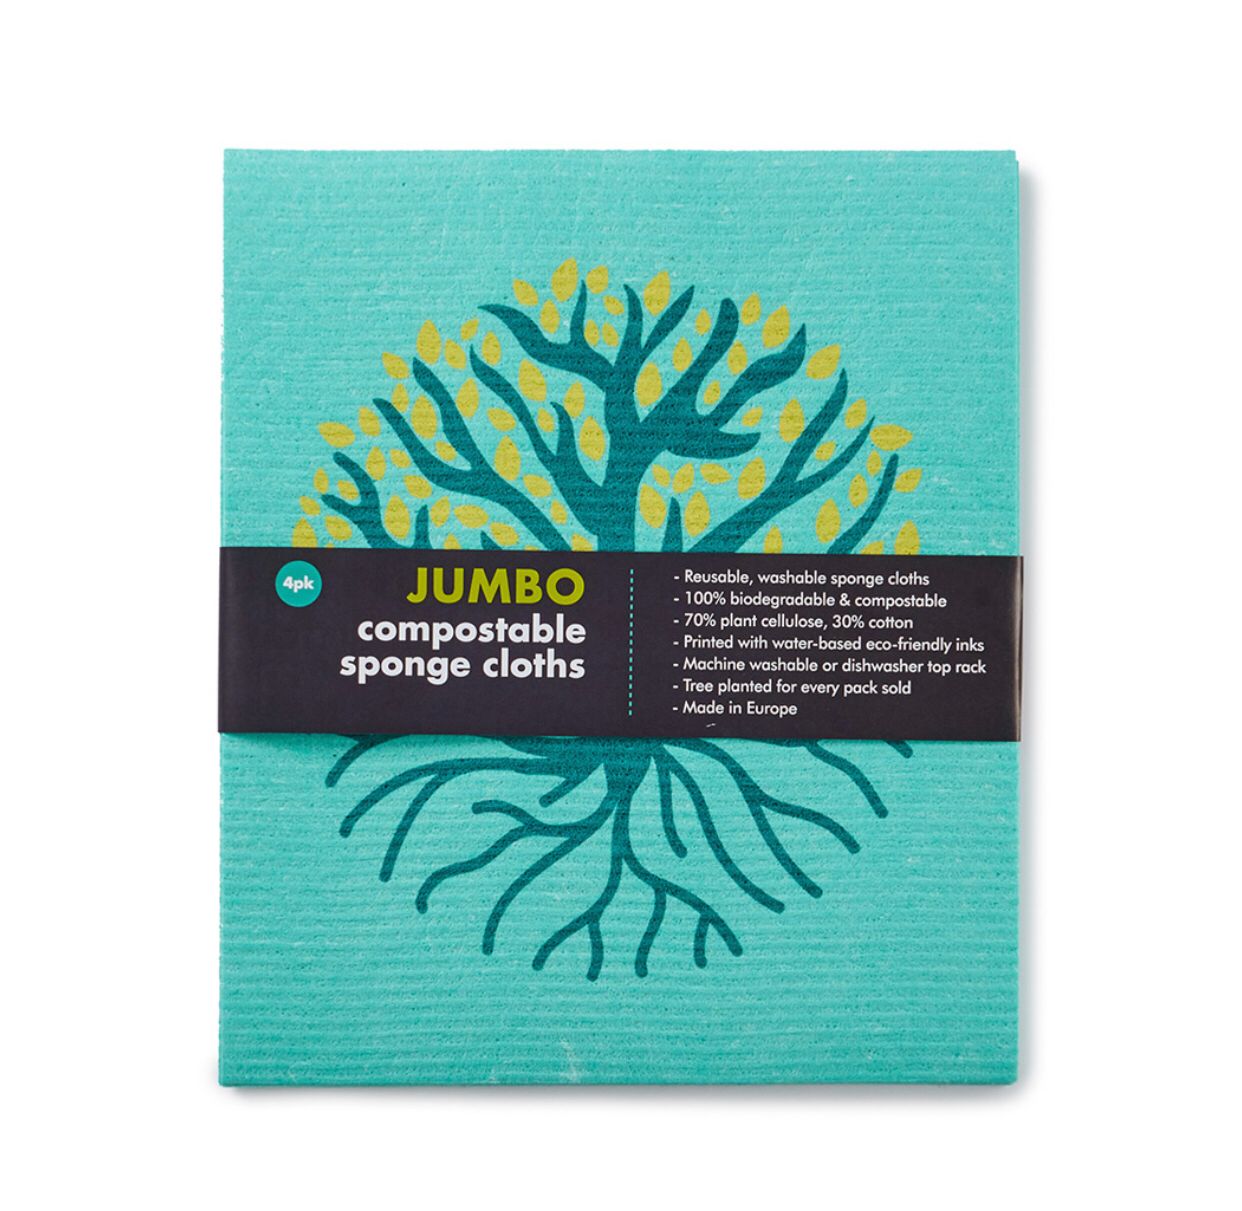 Jumbo Compostable Sponge Cloths by Eco Living